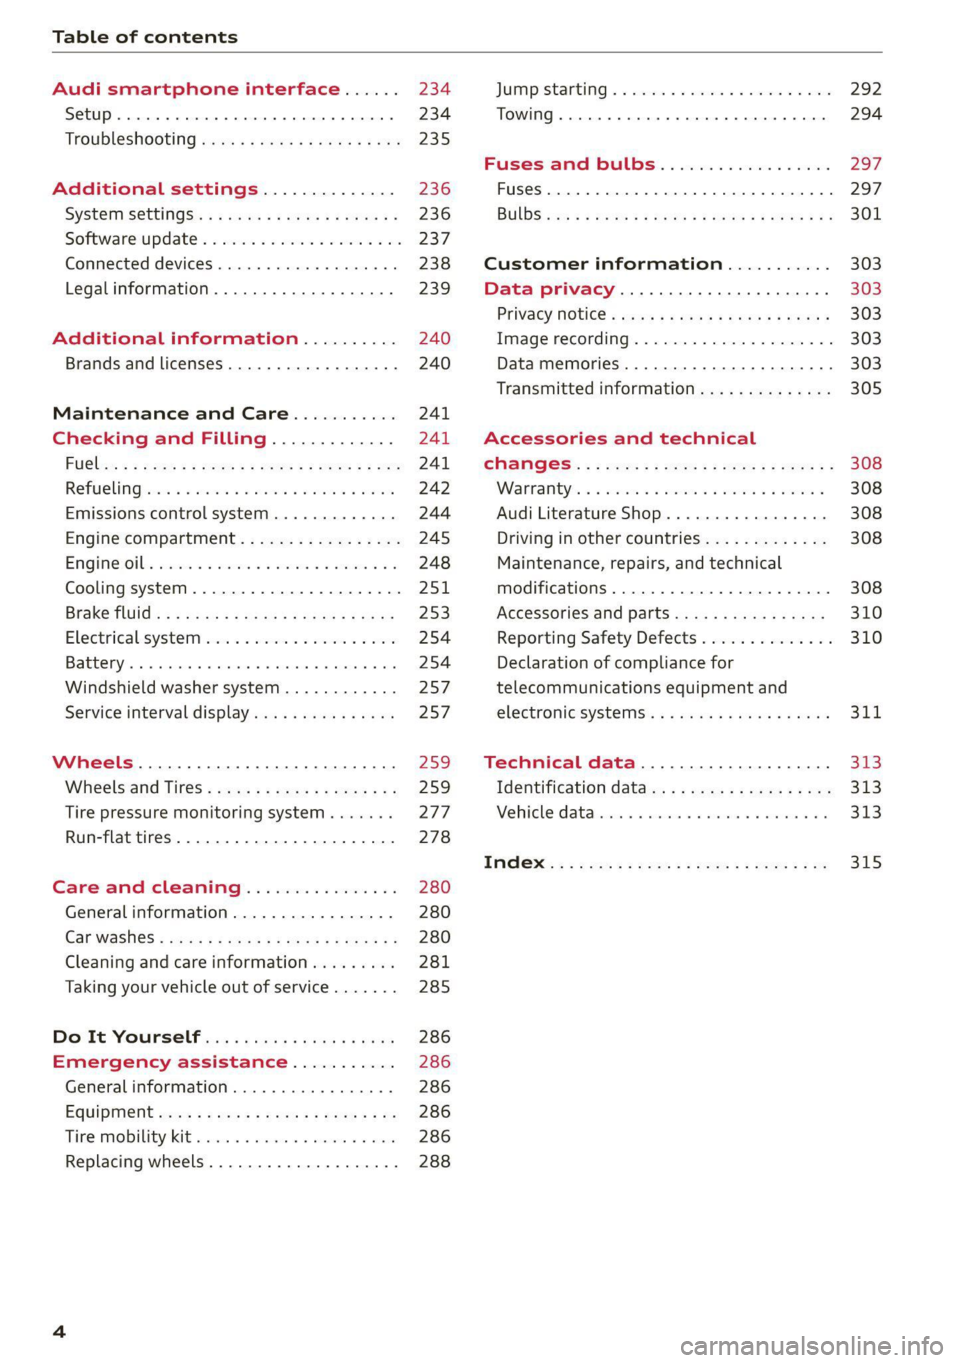 AUDI Q7 2021  Owner´s Manual Table of contents 
  
Audi smartphone interface...... 234 
Setup... eee eee eee eee 234 
Troubleshooting wv s  & wees se cows 6 bey 235 
Additional settings.............. 236 
System Settings: : s een